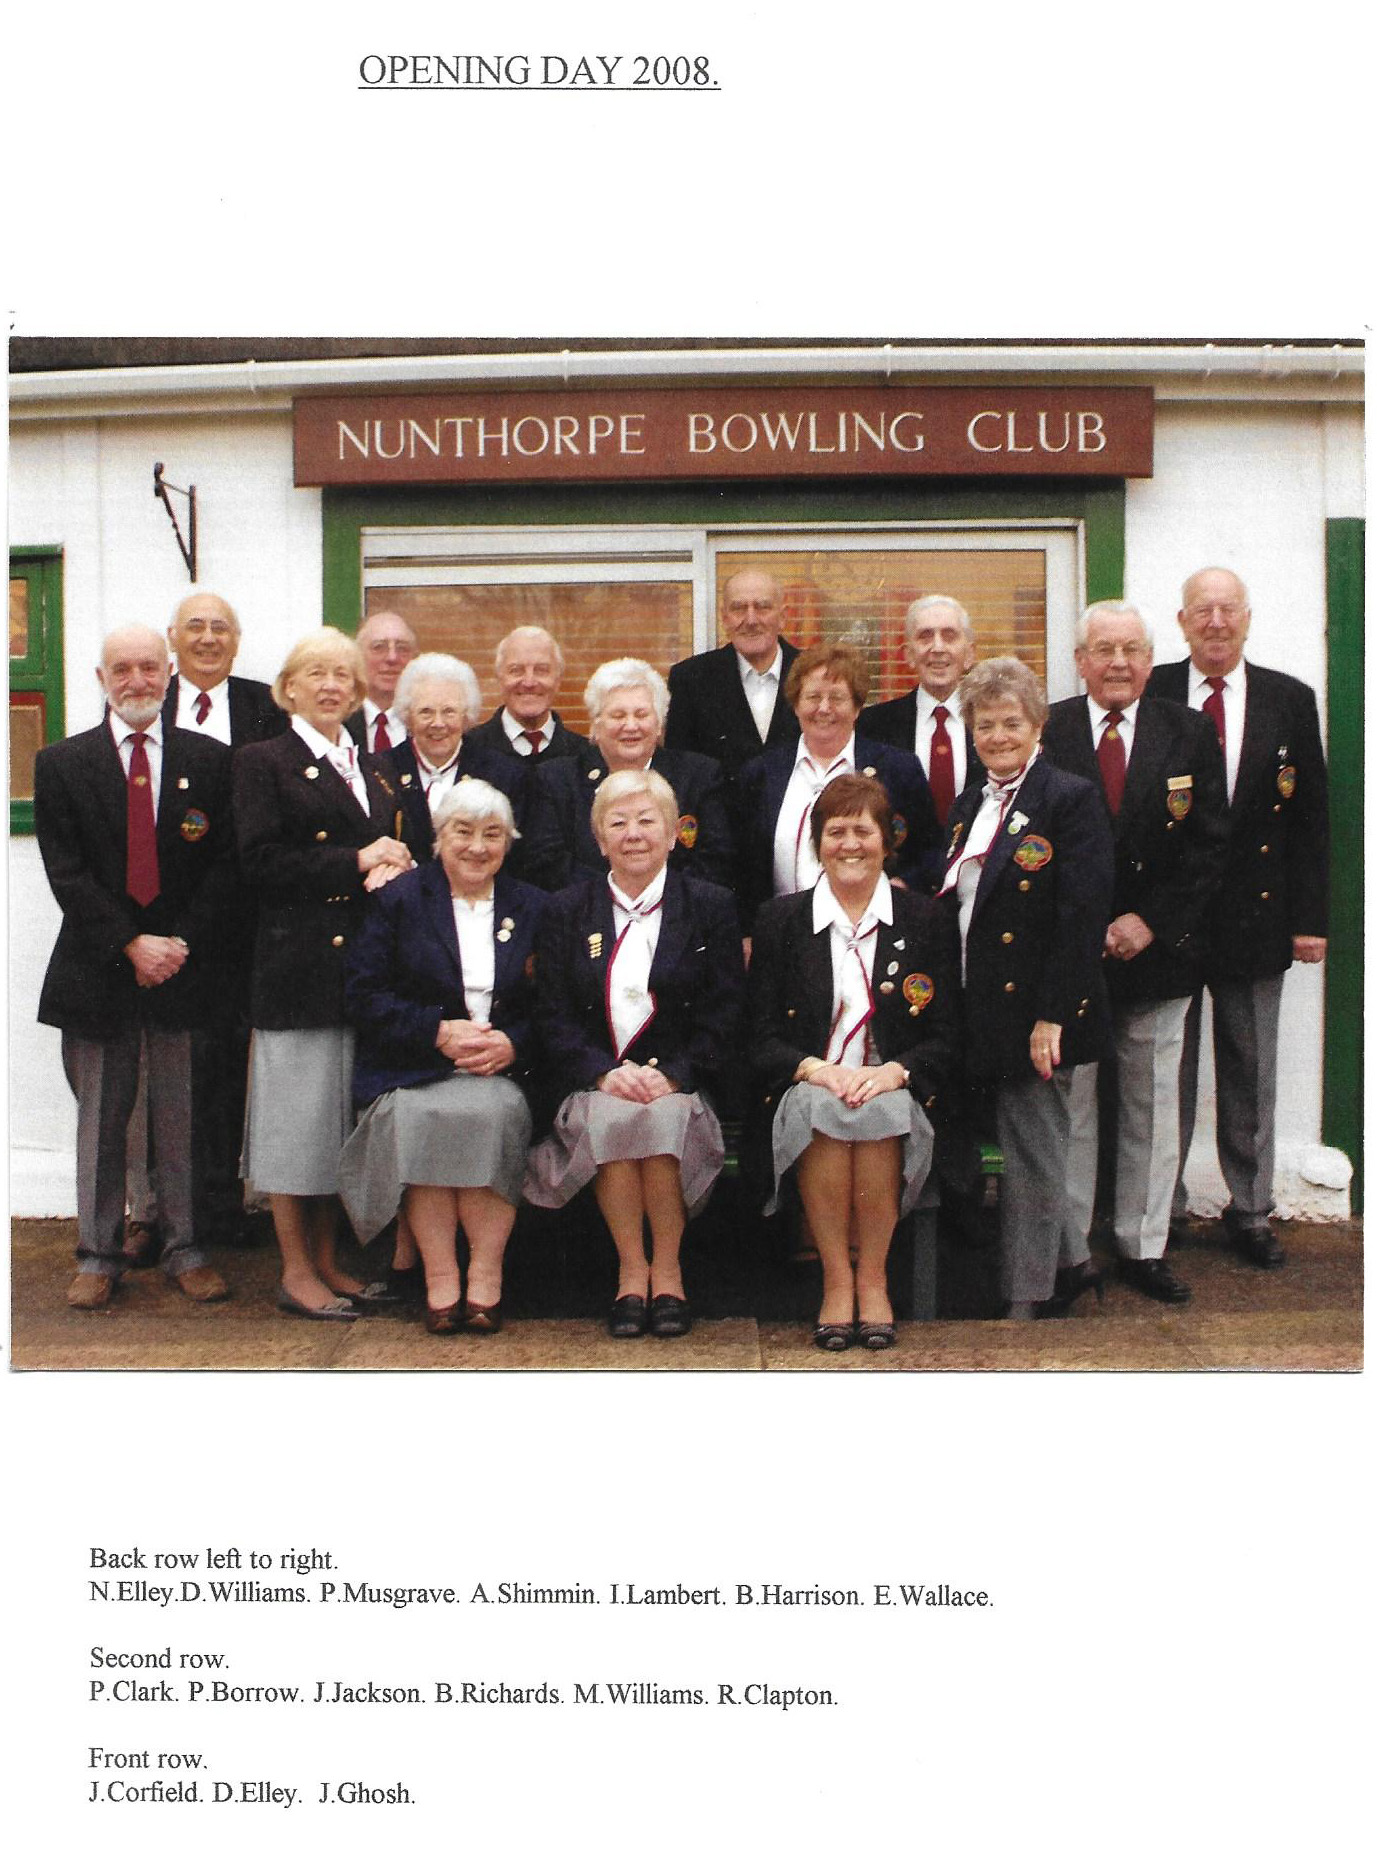 Nunthorpe Bowling Club Centenary Celebrations 2008